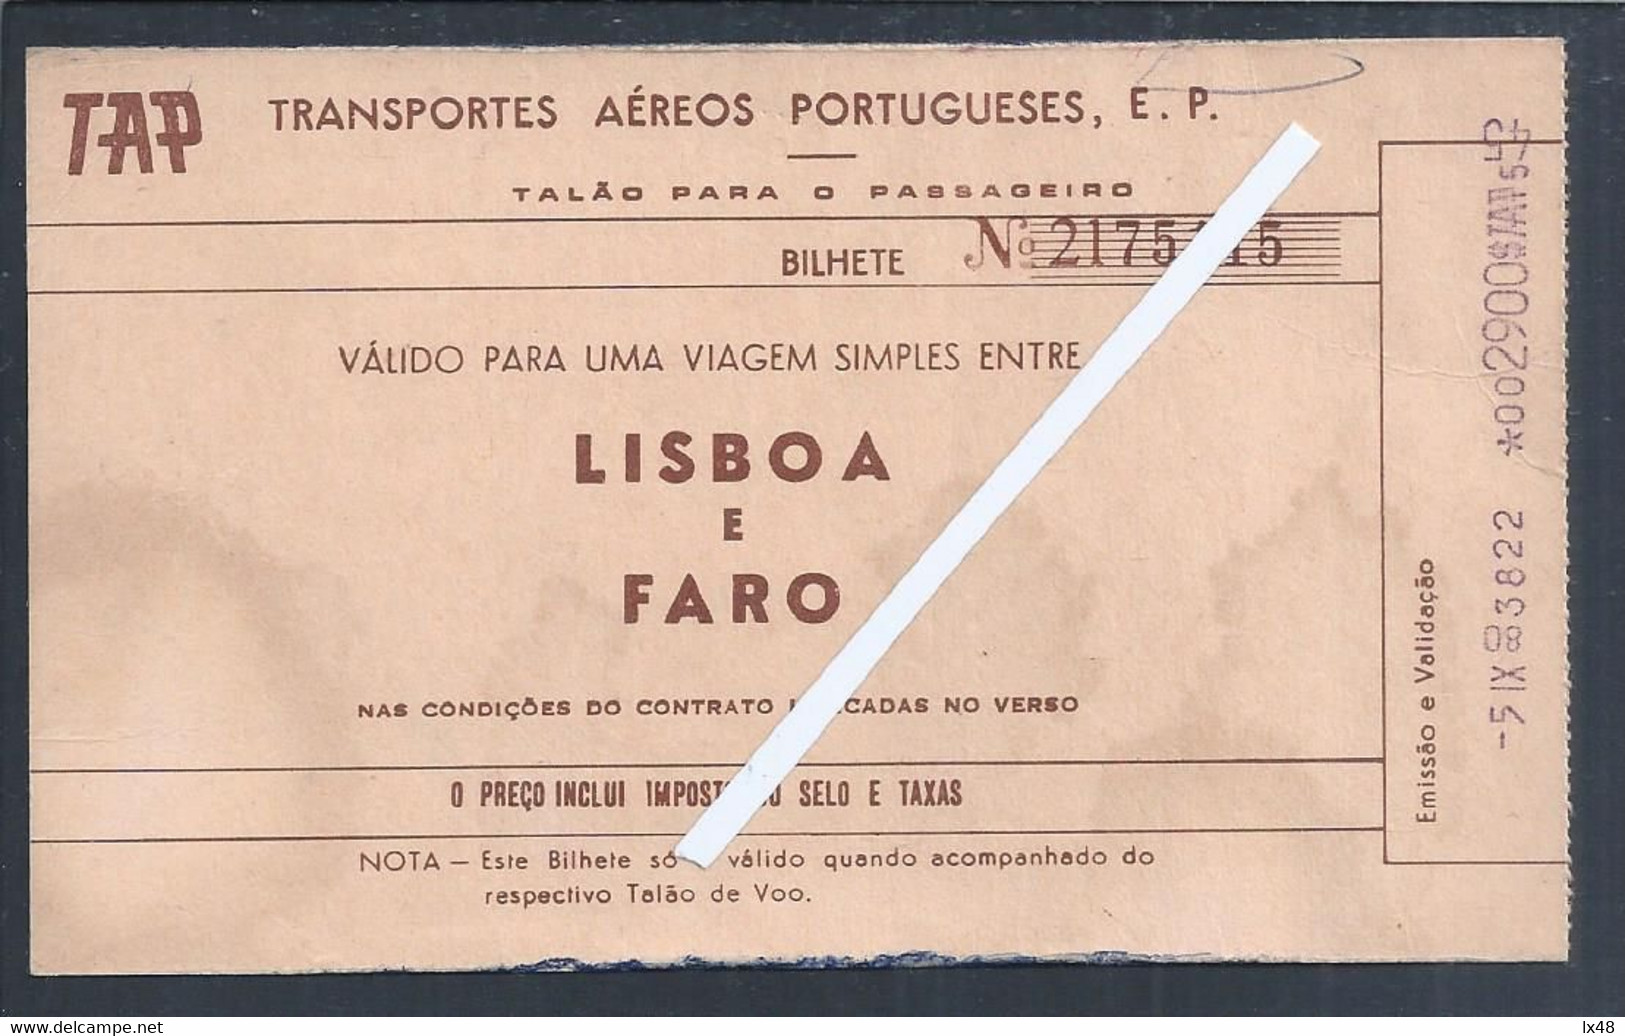 Ticket For TAP Transportes Aéreos Portugueses From Lisbon To Faro. TAP Transportes Aéreos Reiseticket Für Portugiesen Vo - Europe